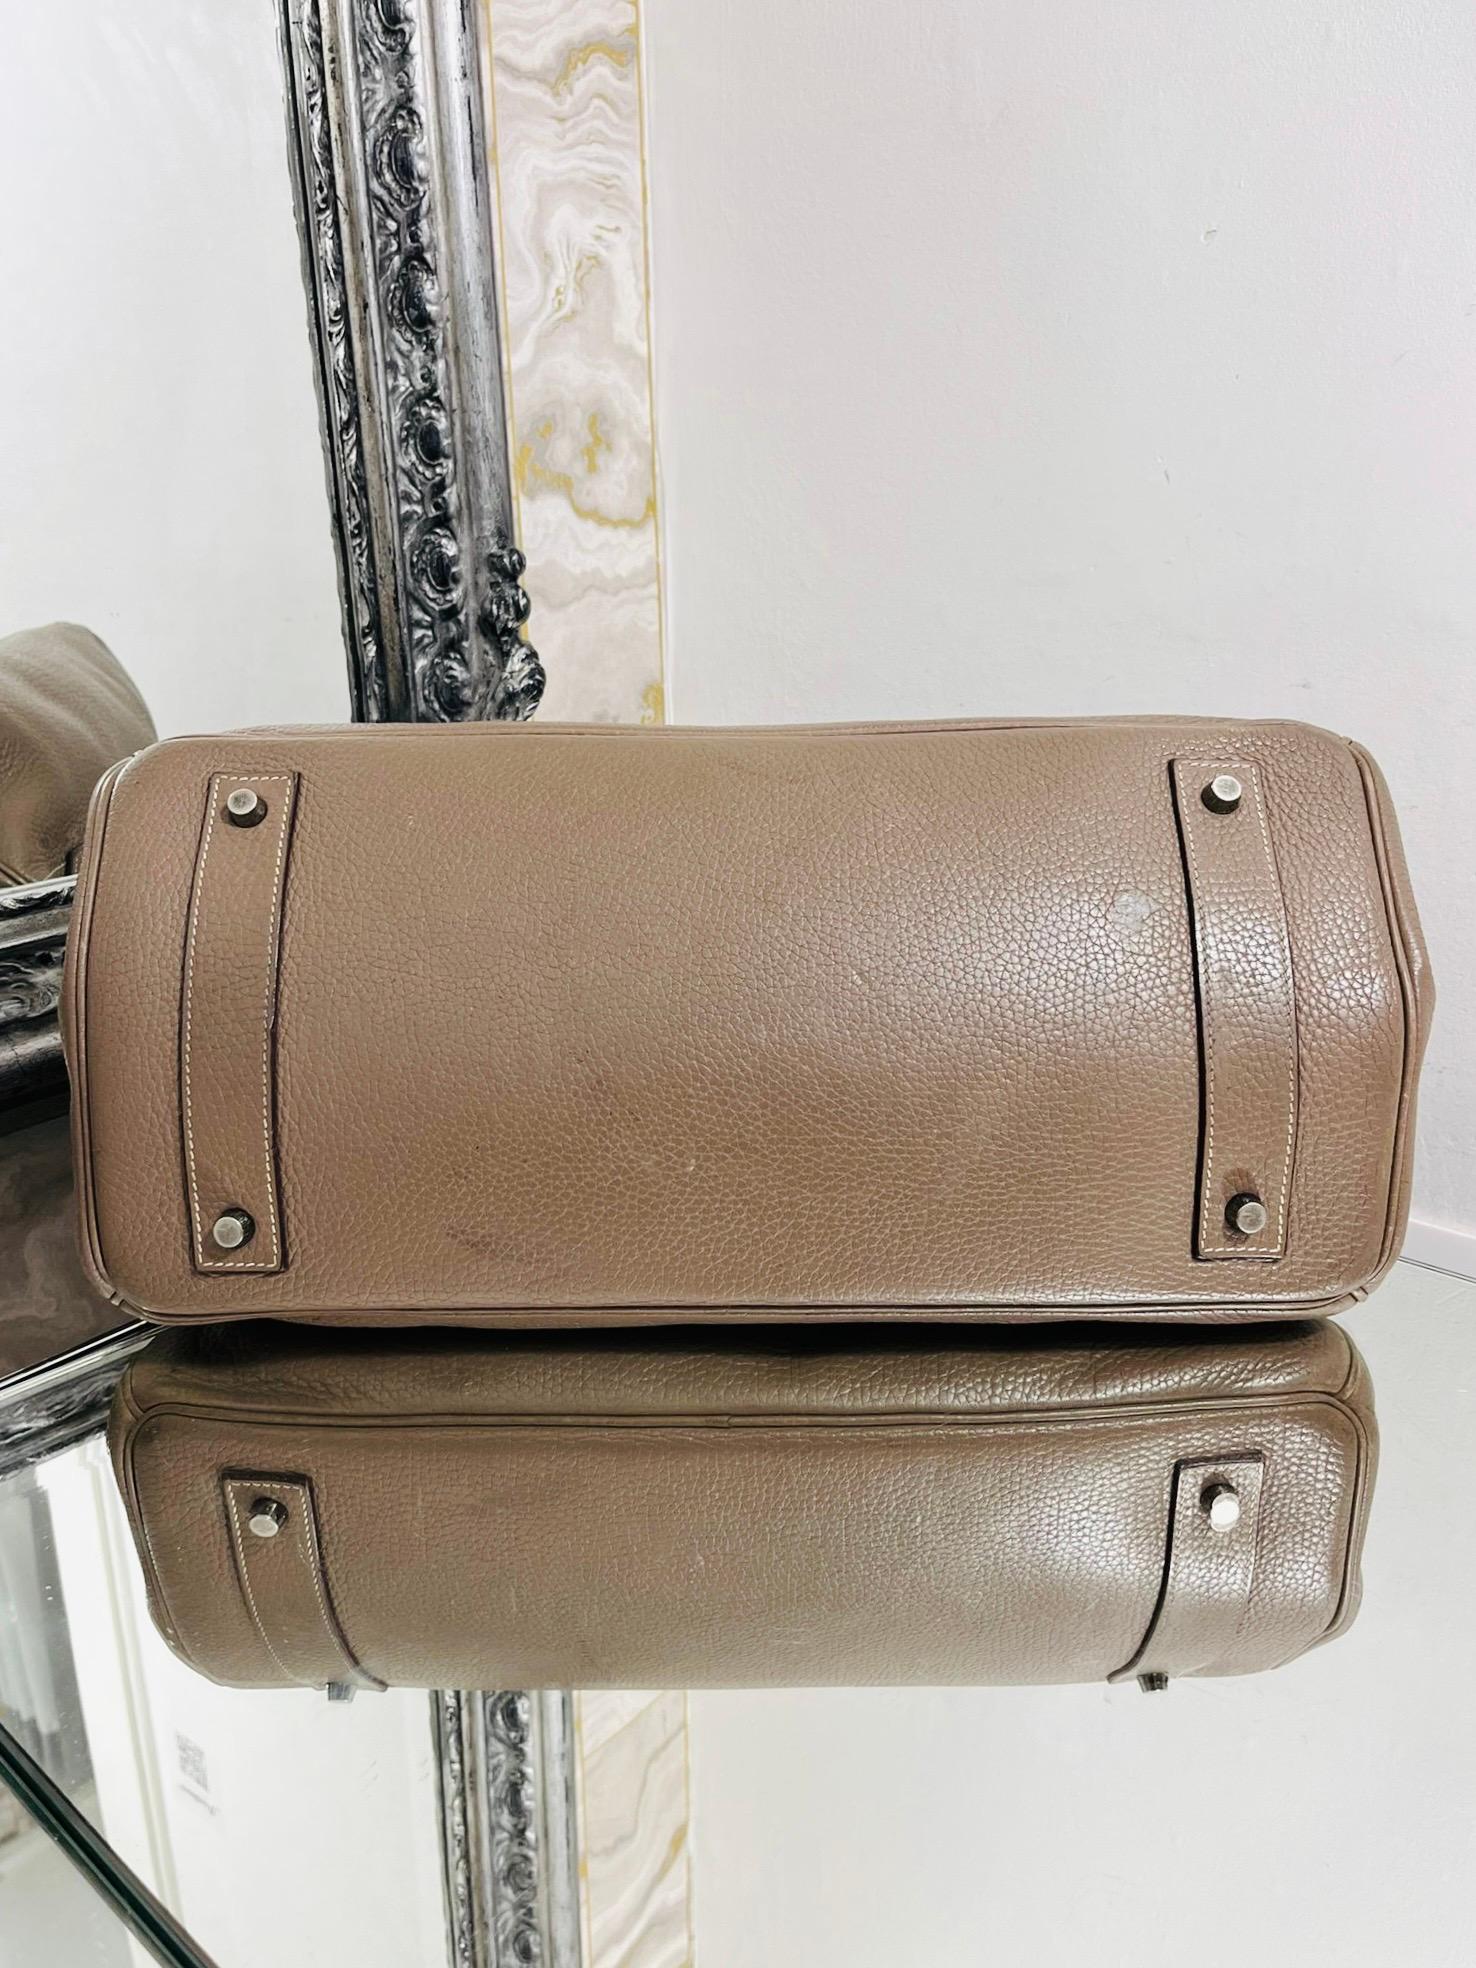 Hermes Jean Paul  Gaultier Birkin 42cm Bag In Good Condition For Sale In London, GB